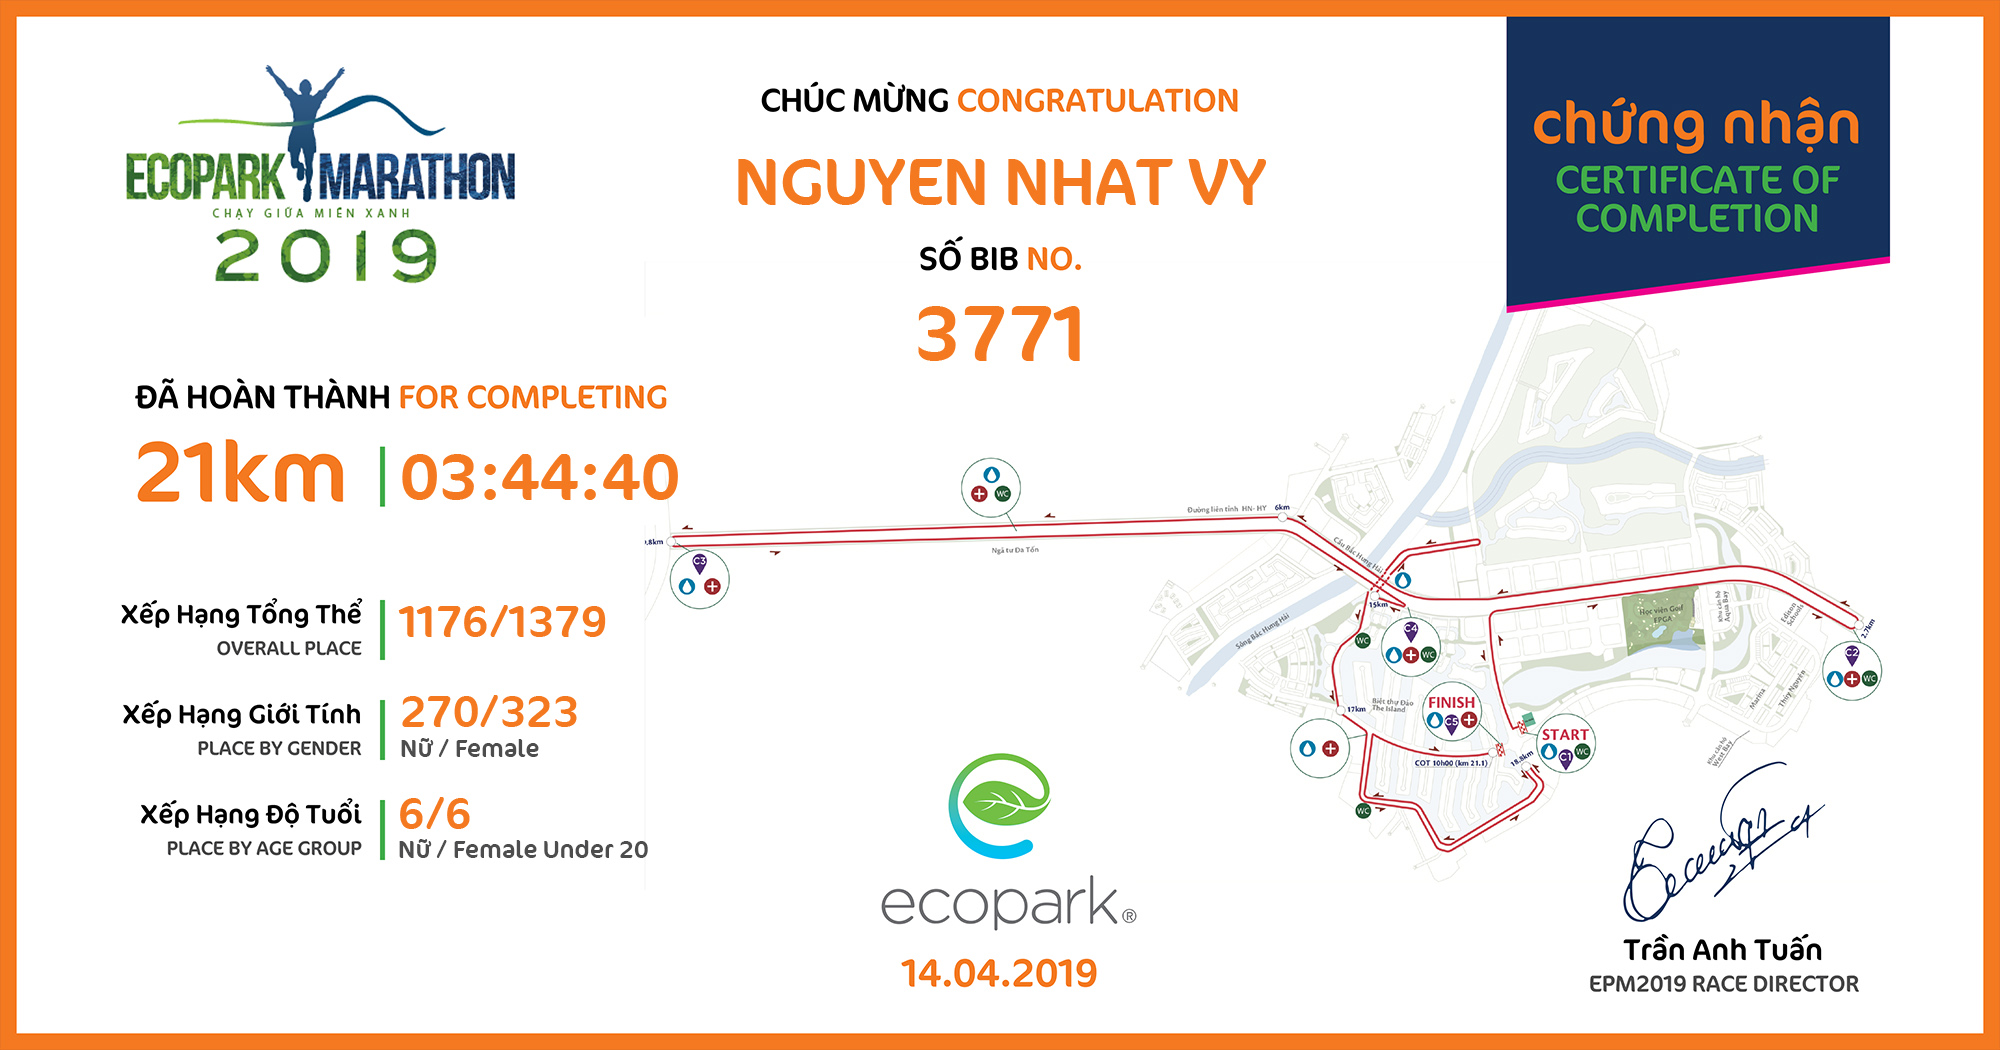 3771 - Nguyen Nhat Vy